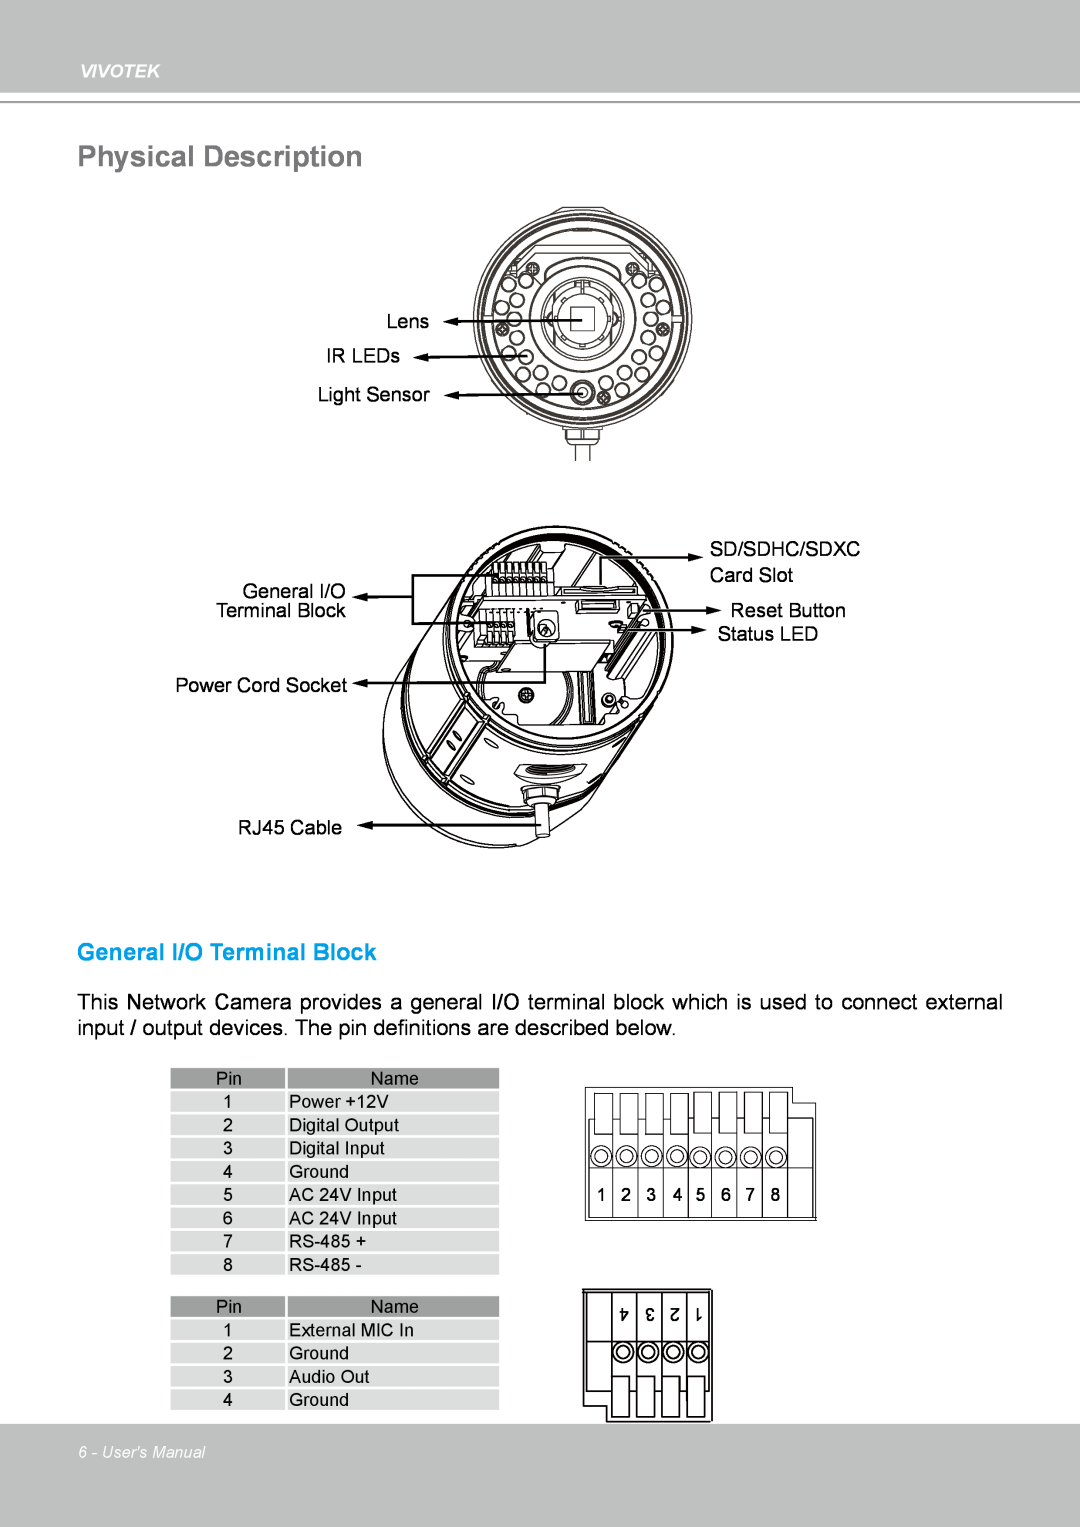 Vivotek IP8361 user manual Physical Description, General I/O Terminal Block, Sd/Sdhc/Sdxc, Power Cord Socket, Vivotek 